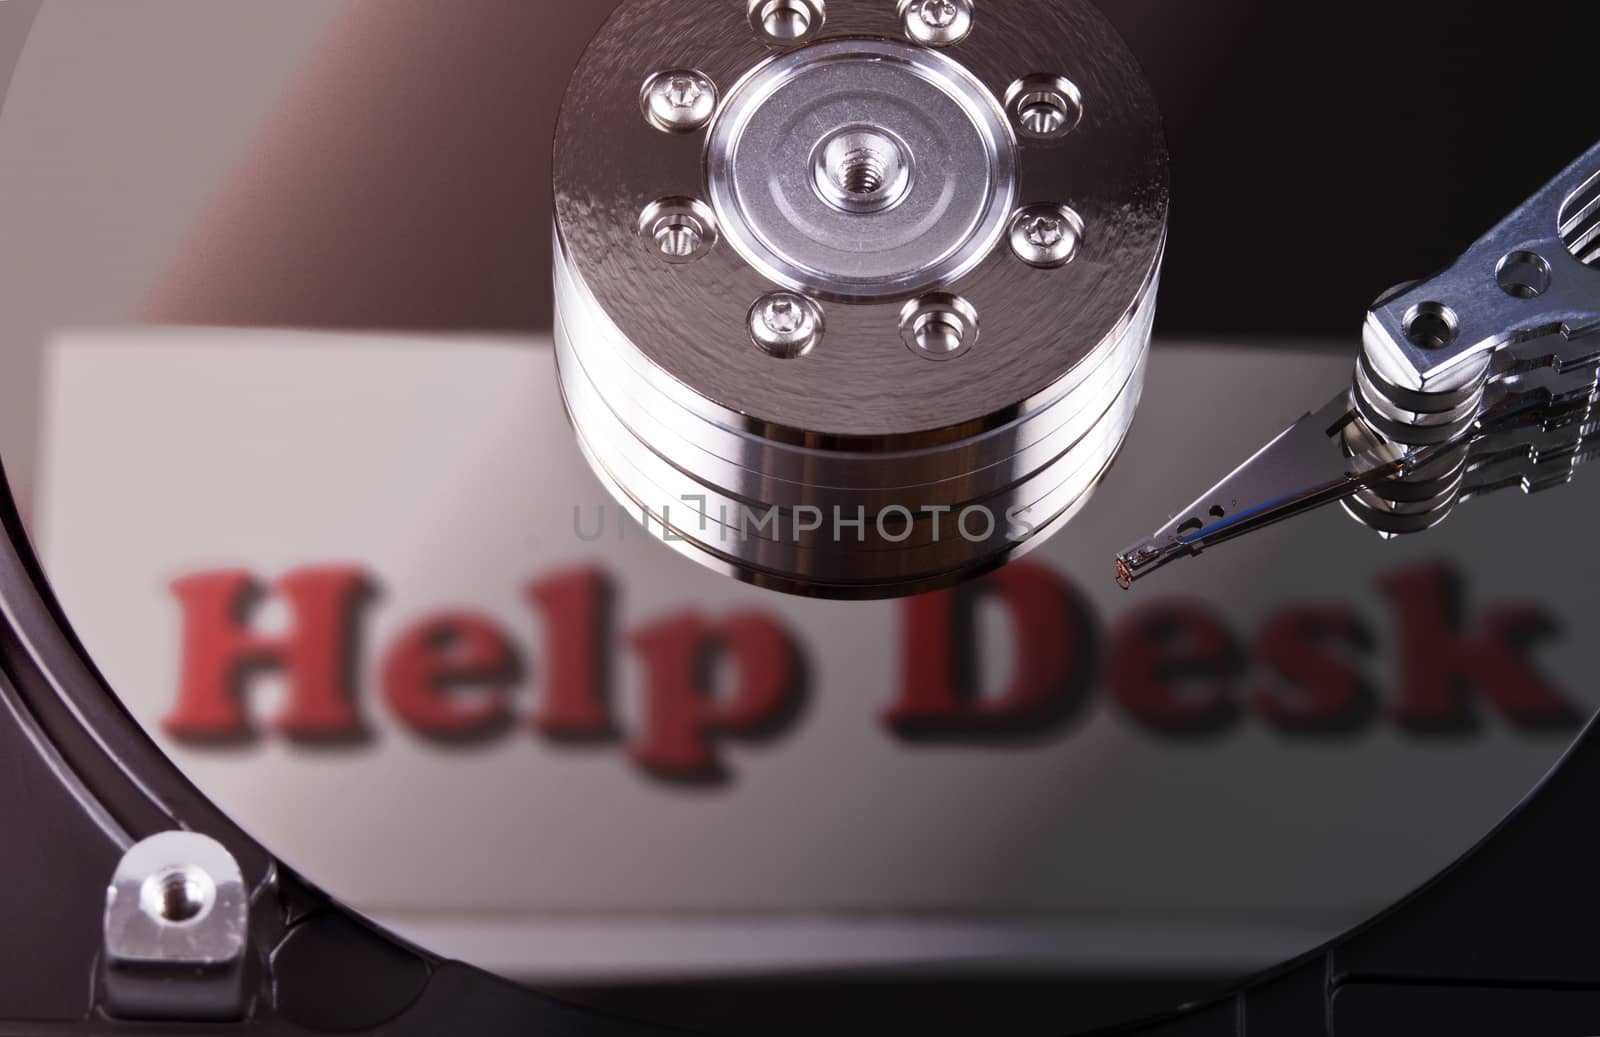 help desk inscripton reflecten on a hard drive disks